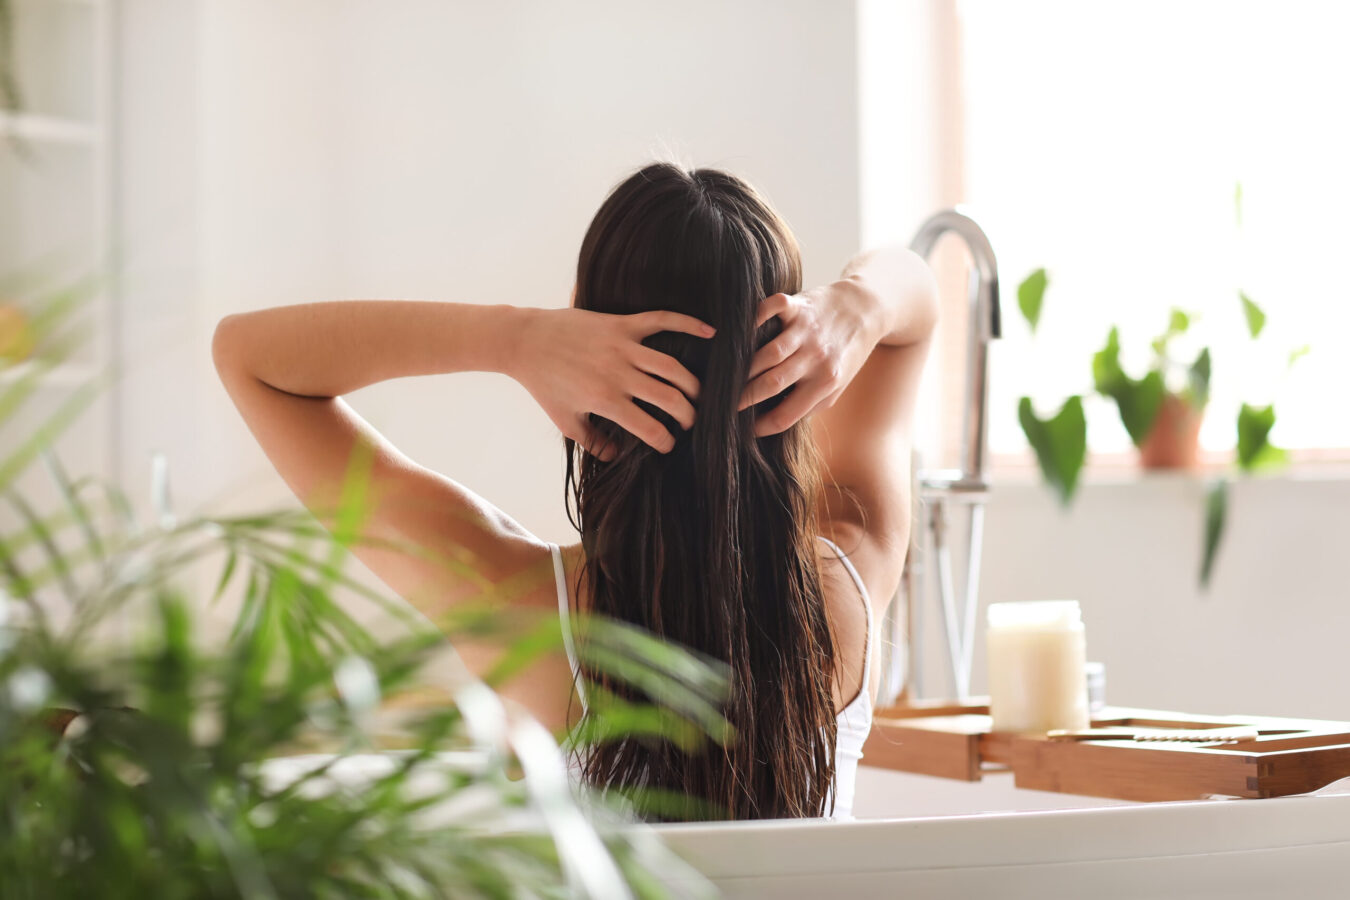 Woman Applying We are Nutrified hair growth oil to hair in bathroom